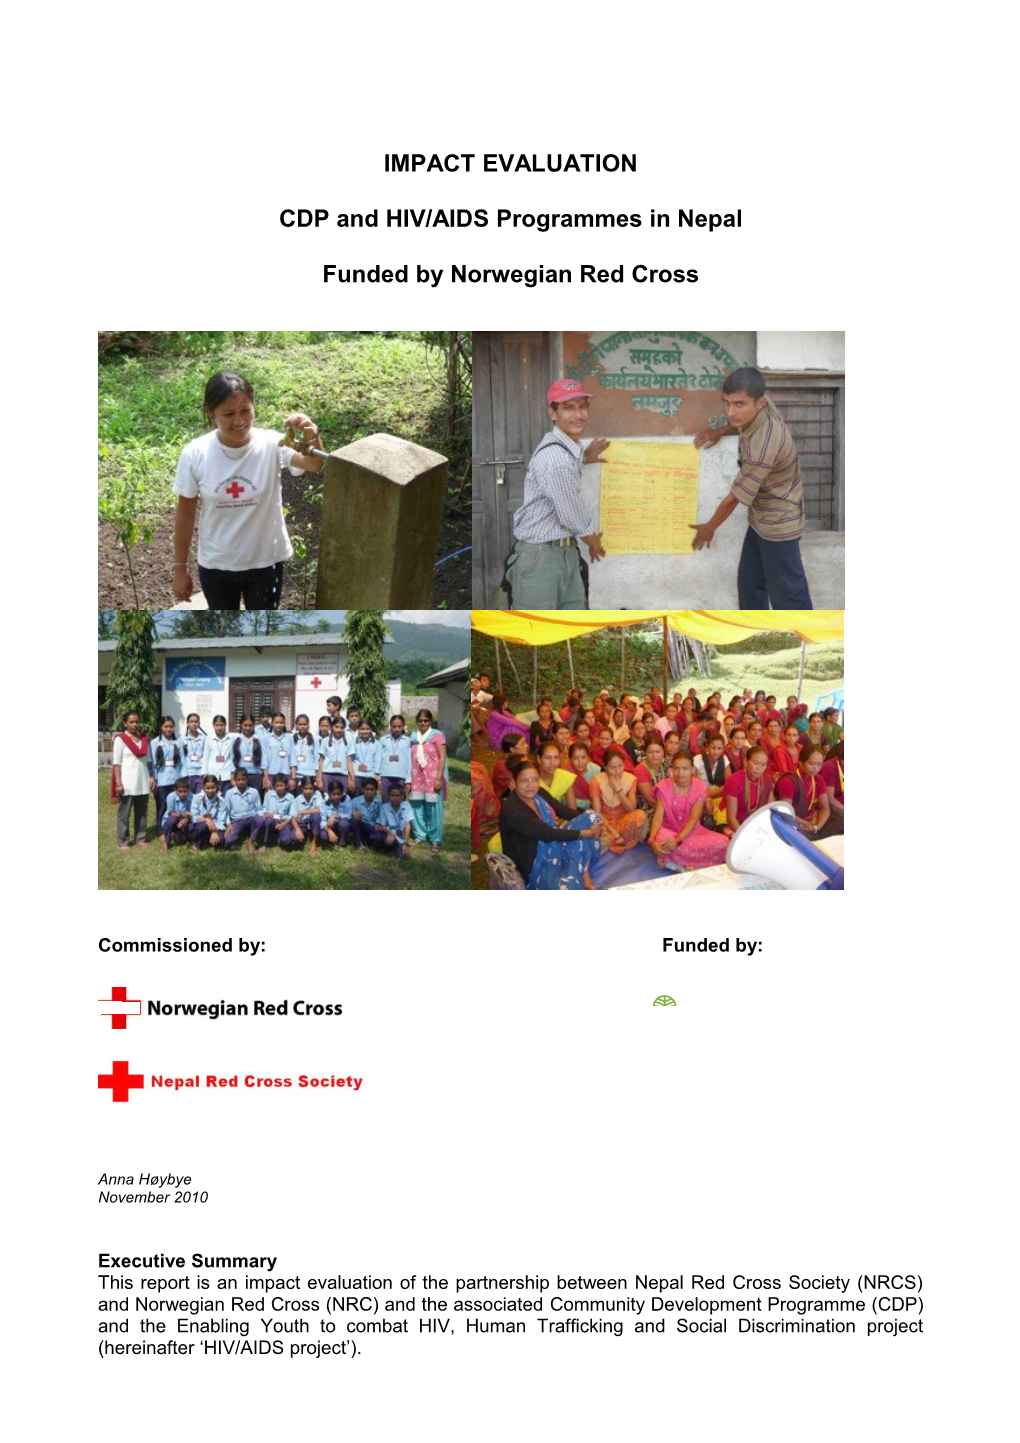 Impact Evaluation Report: NRCS / NRC Partnership and Associated Programmes